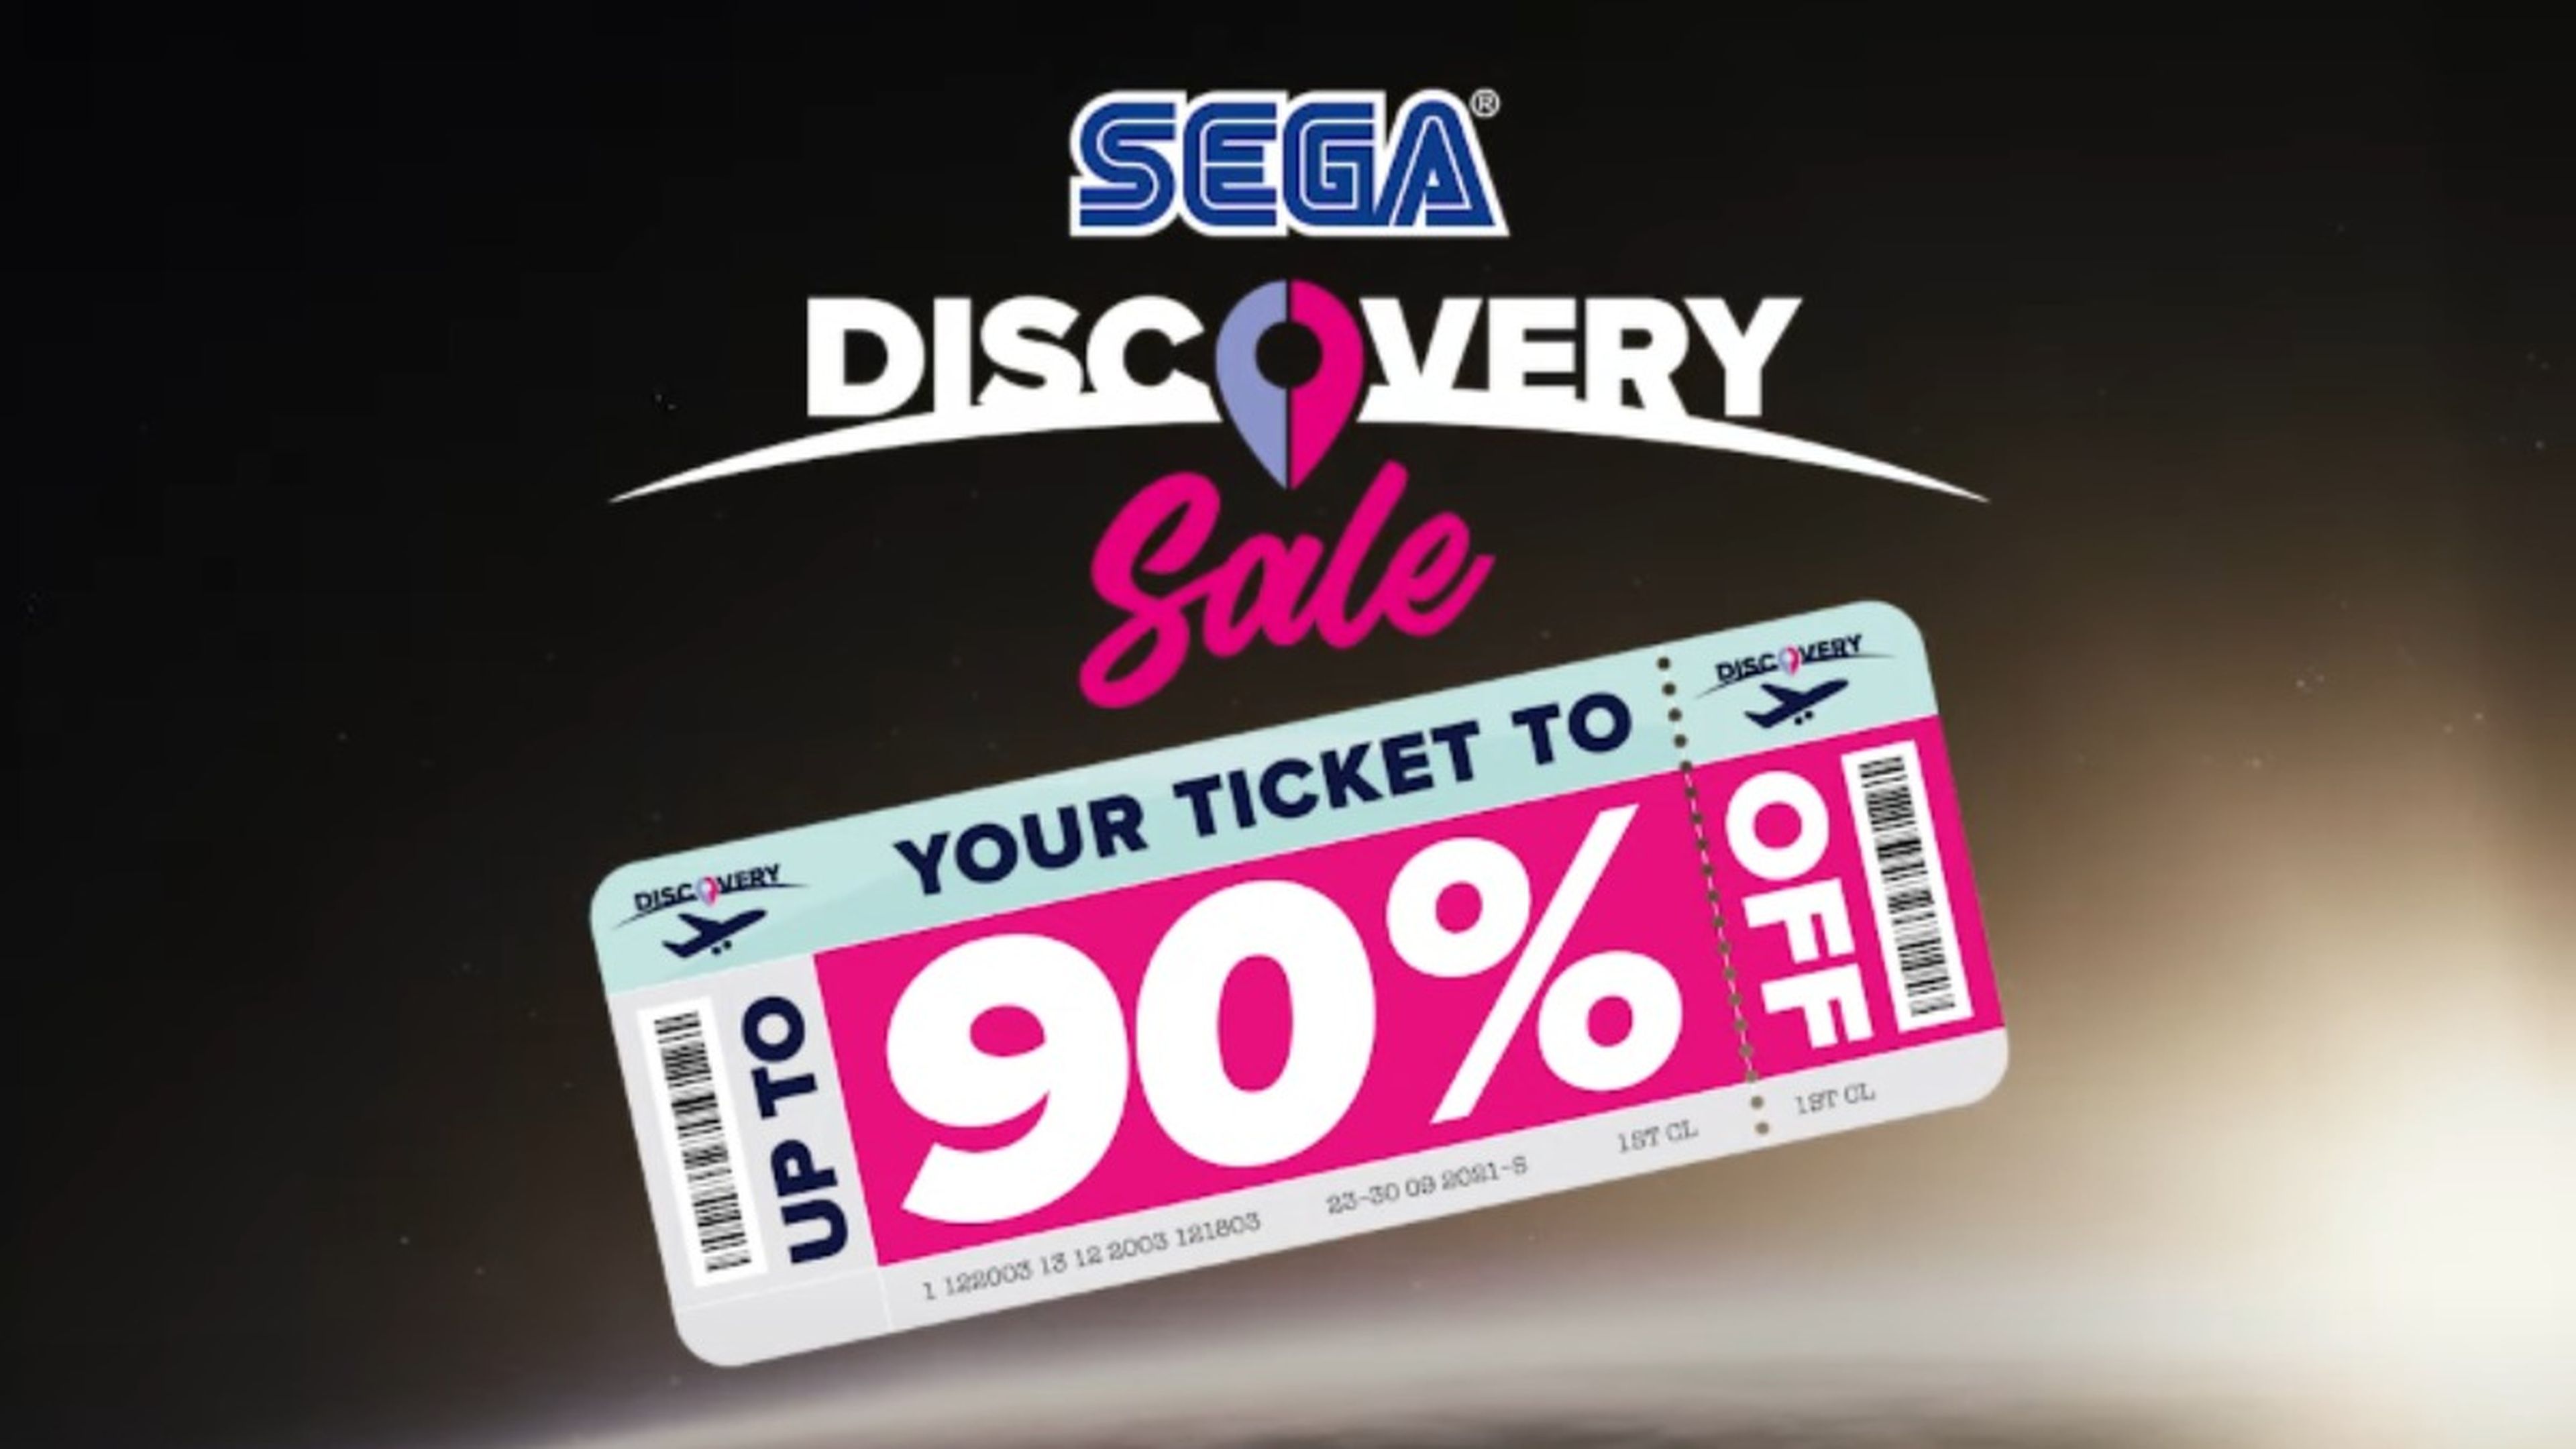 Sega Discovery Sales